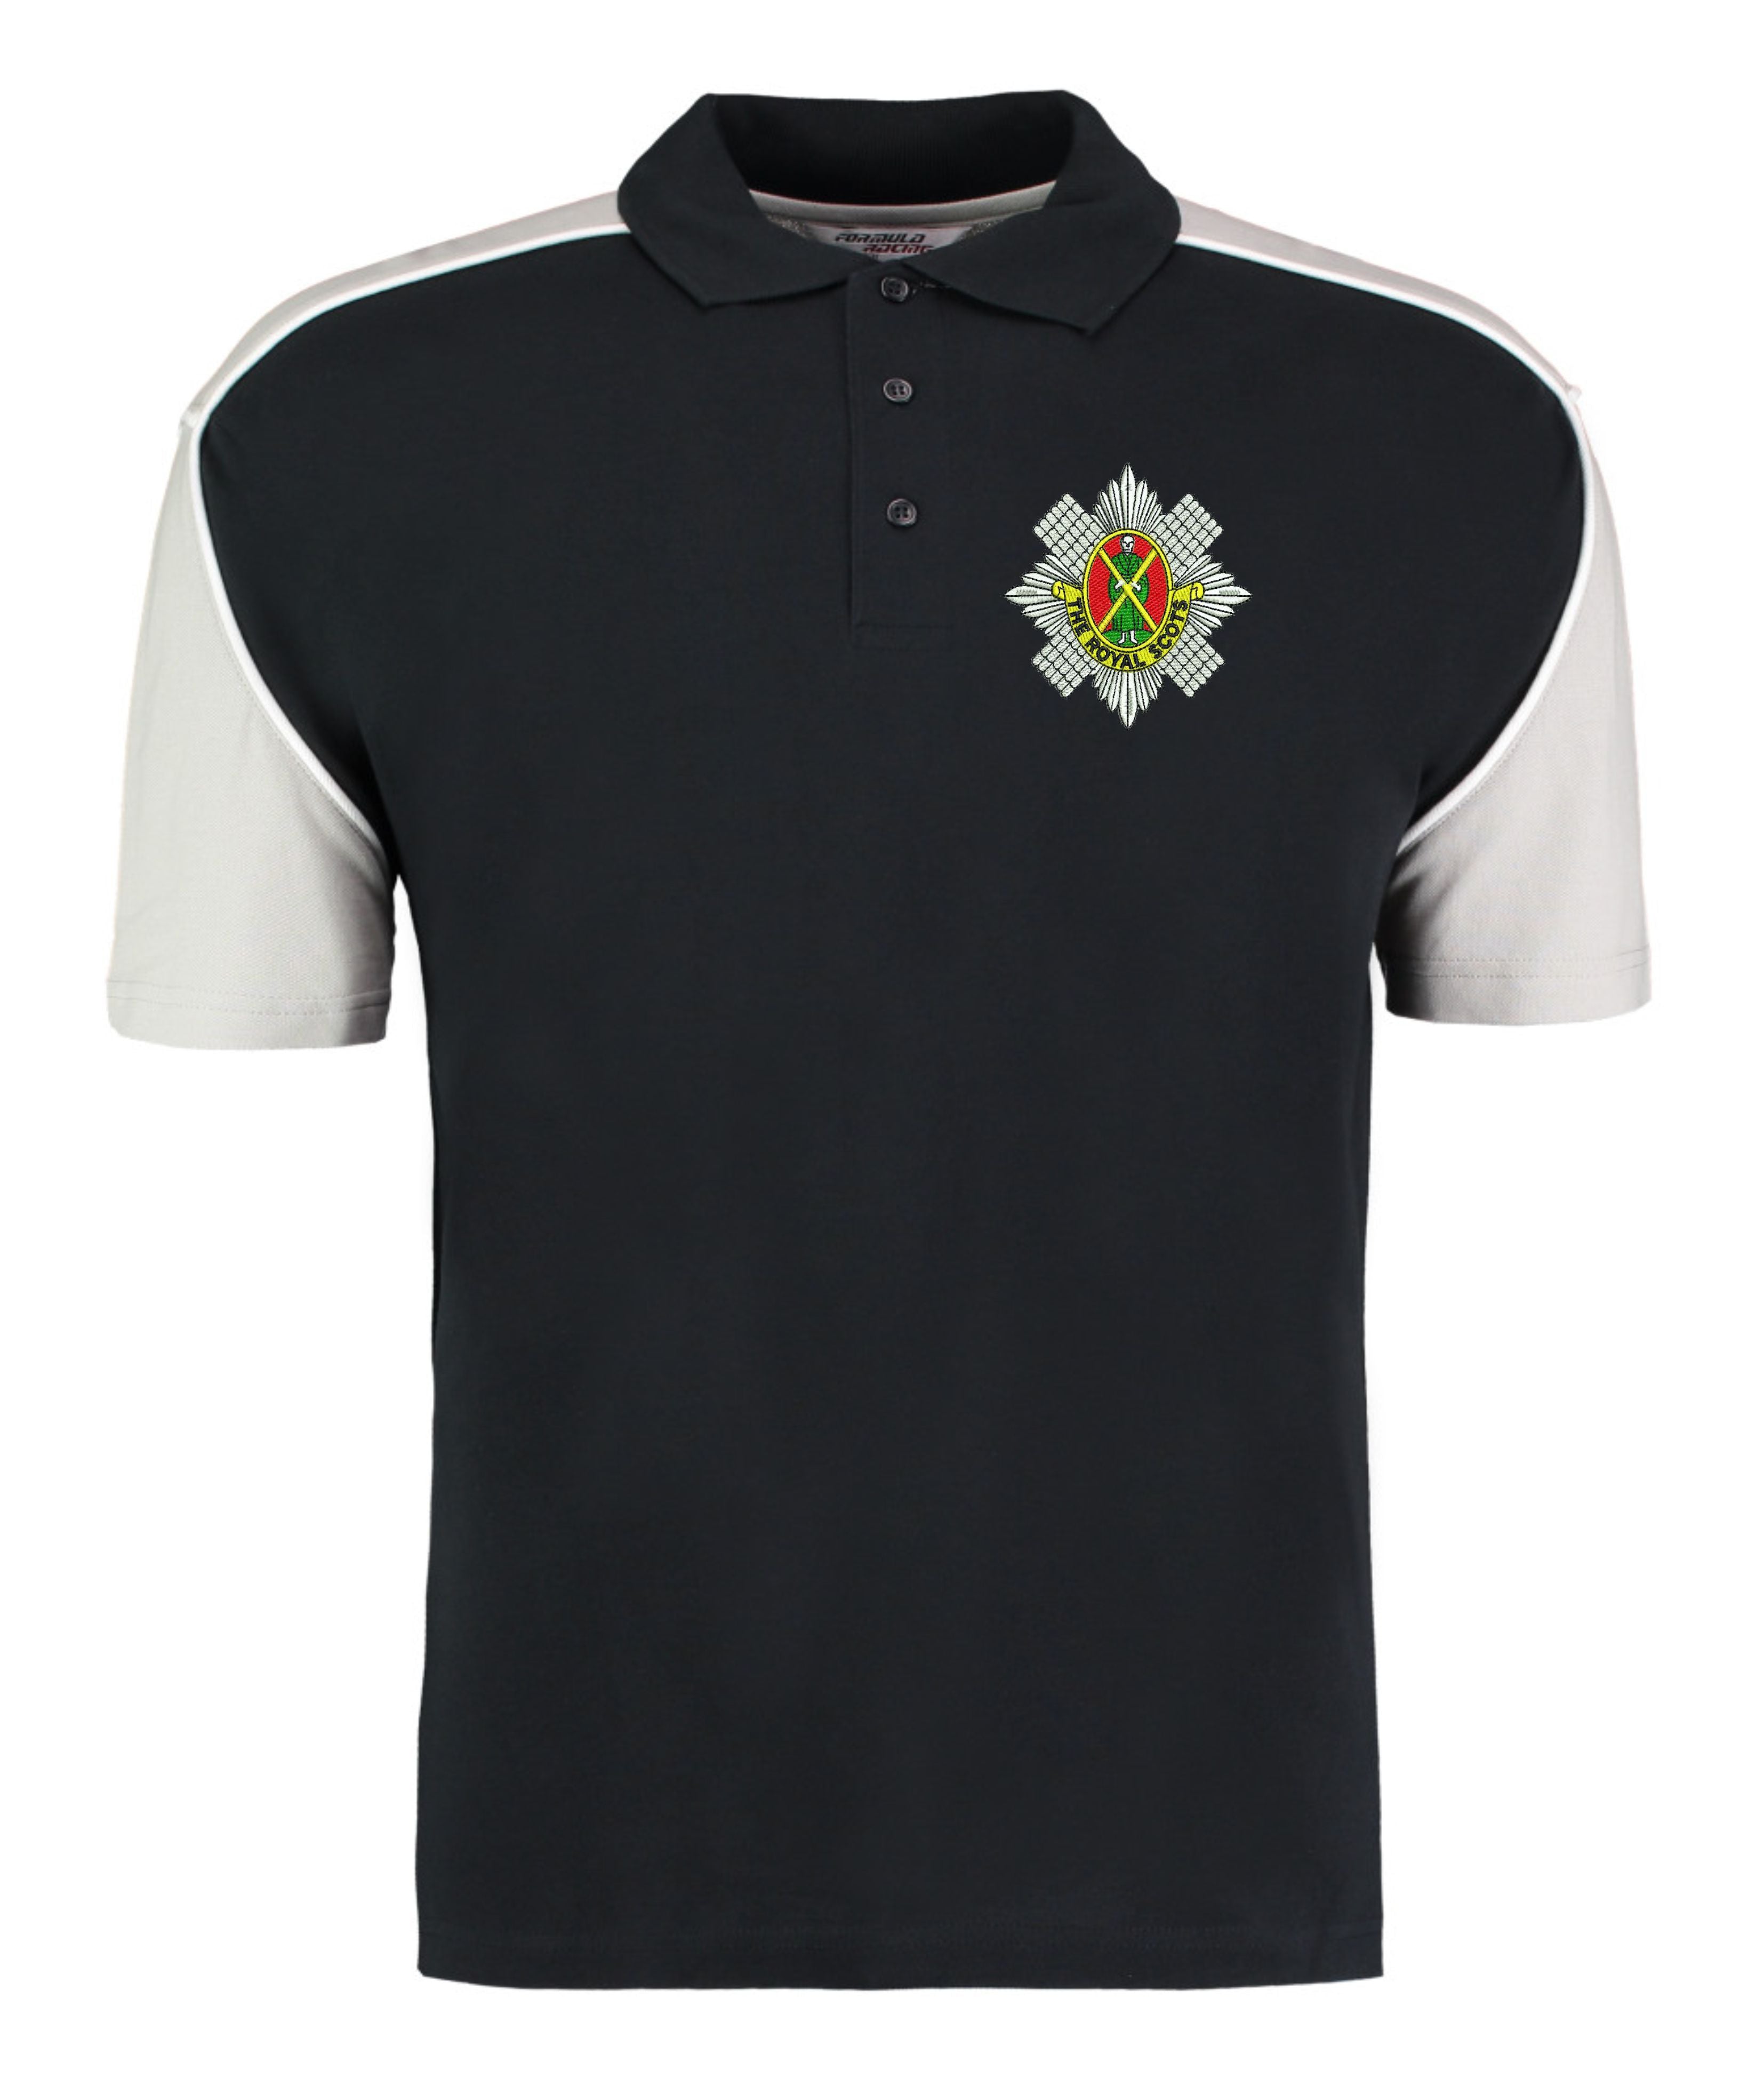 The Royal Scots sport polo shirt